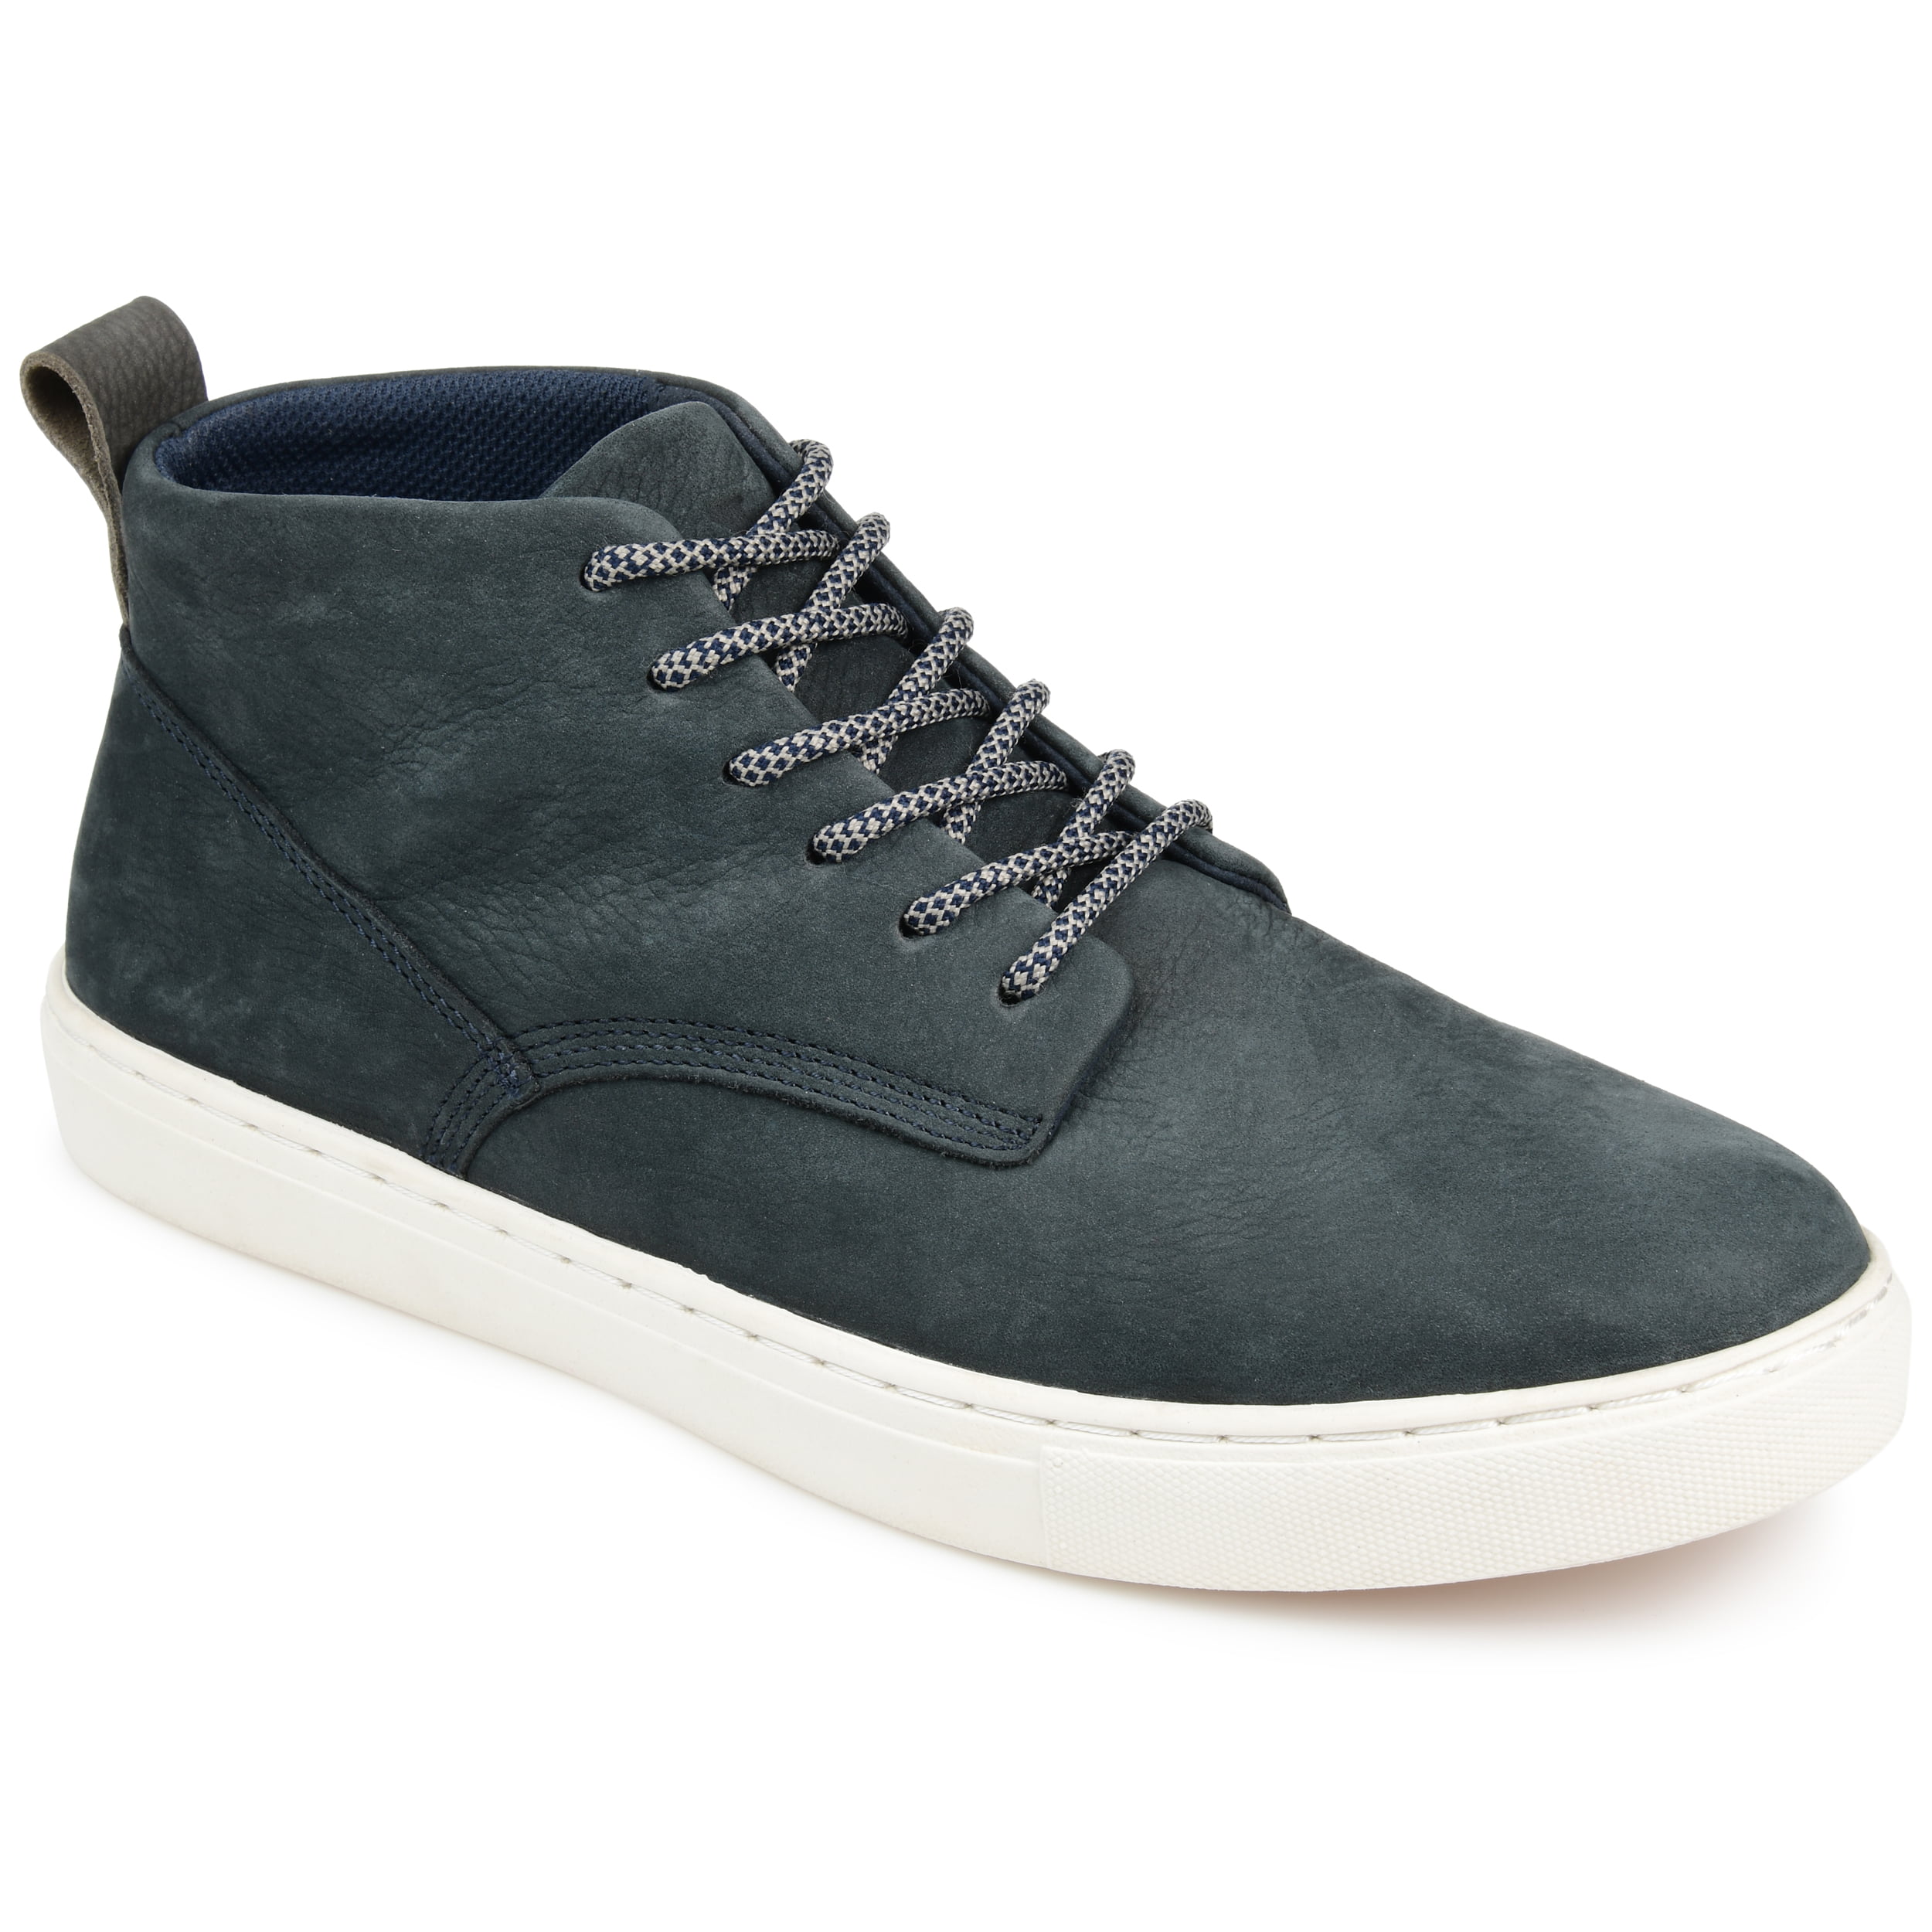 Territory Rove Casual Leather Sneaker Boot - Walmart.com